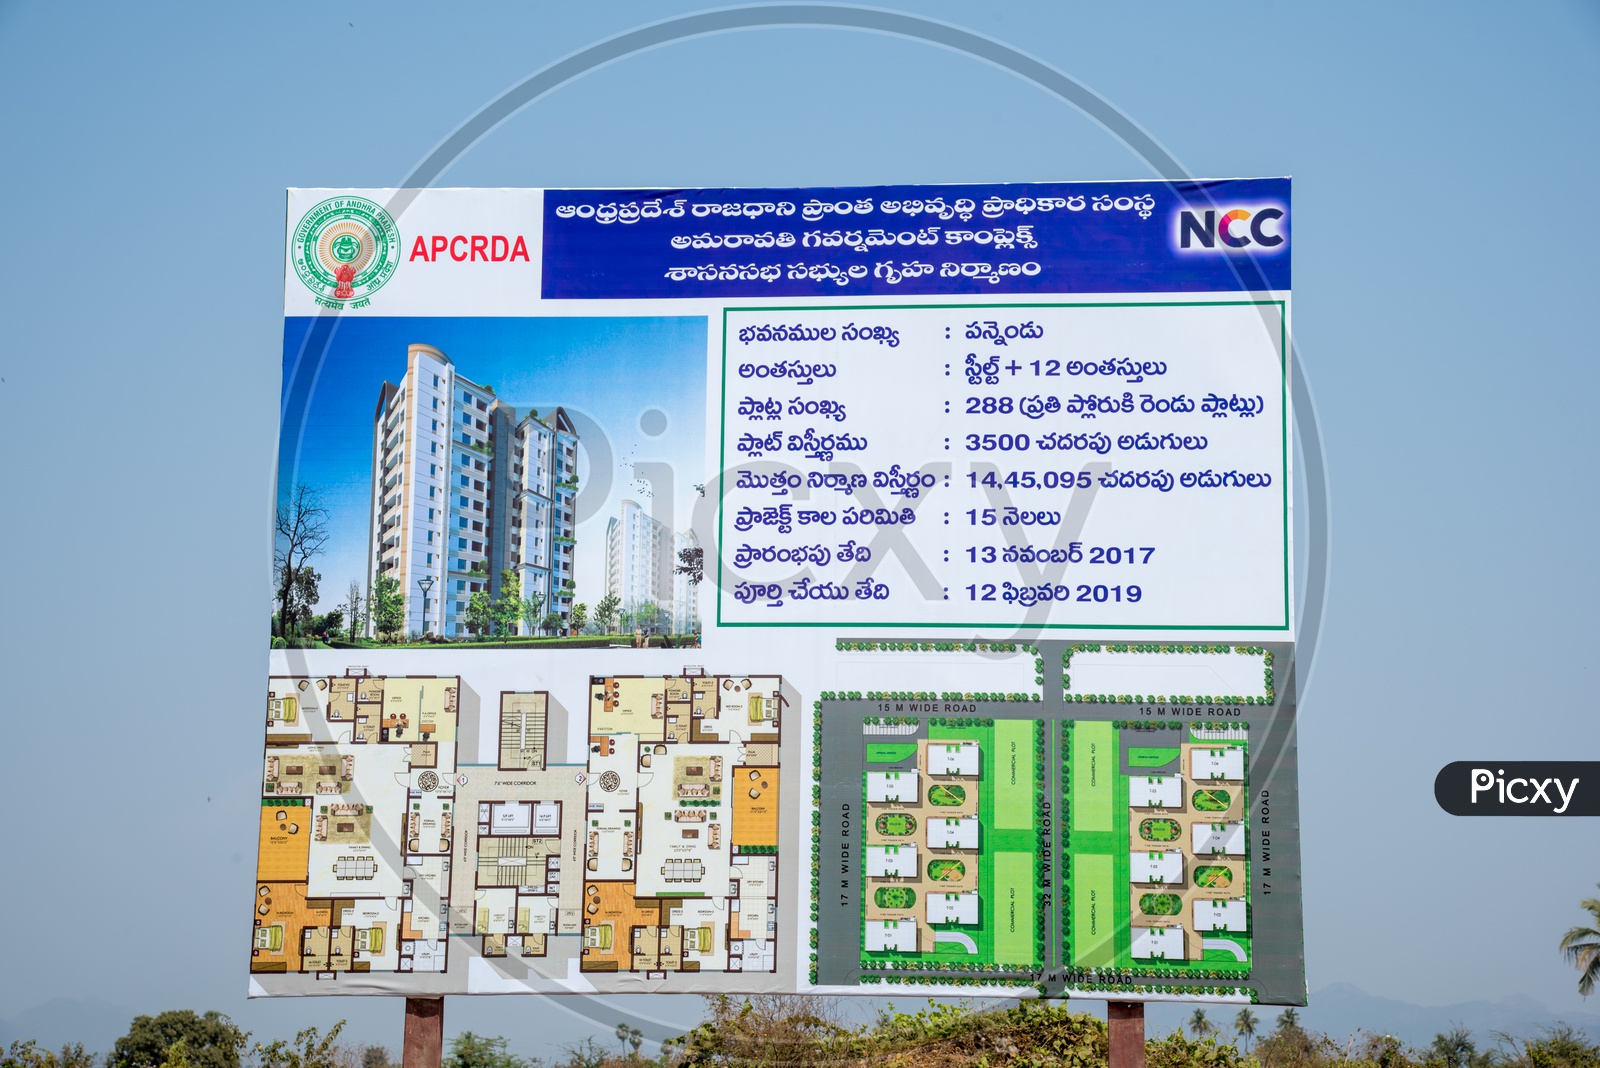 Amaravati Government Complex/MLA Housings